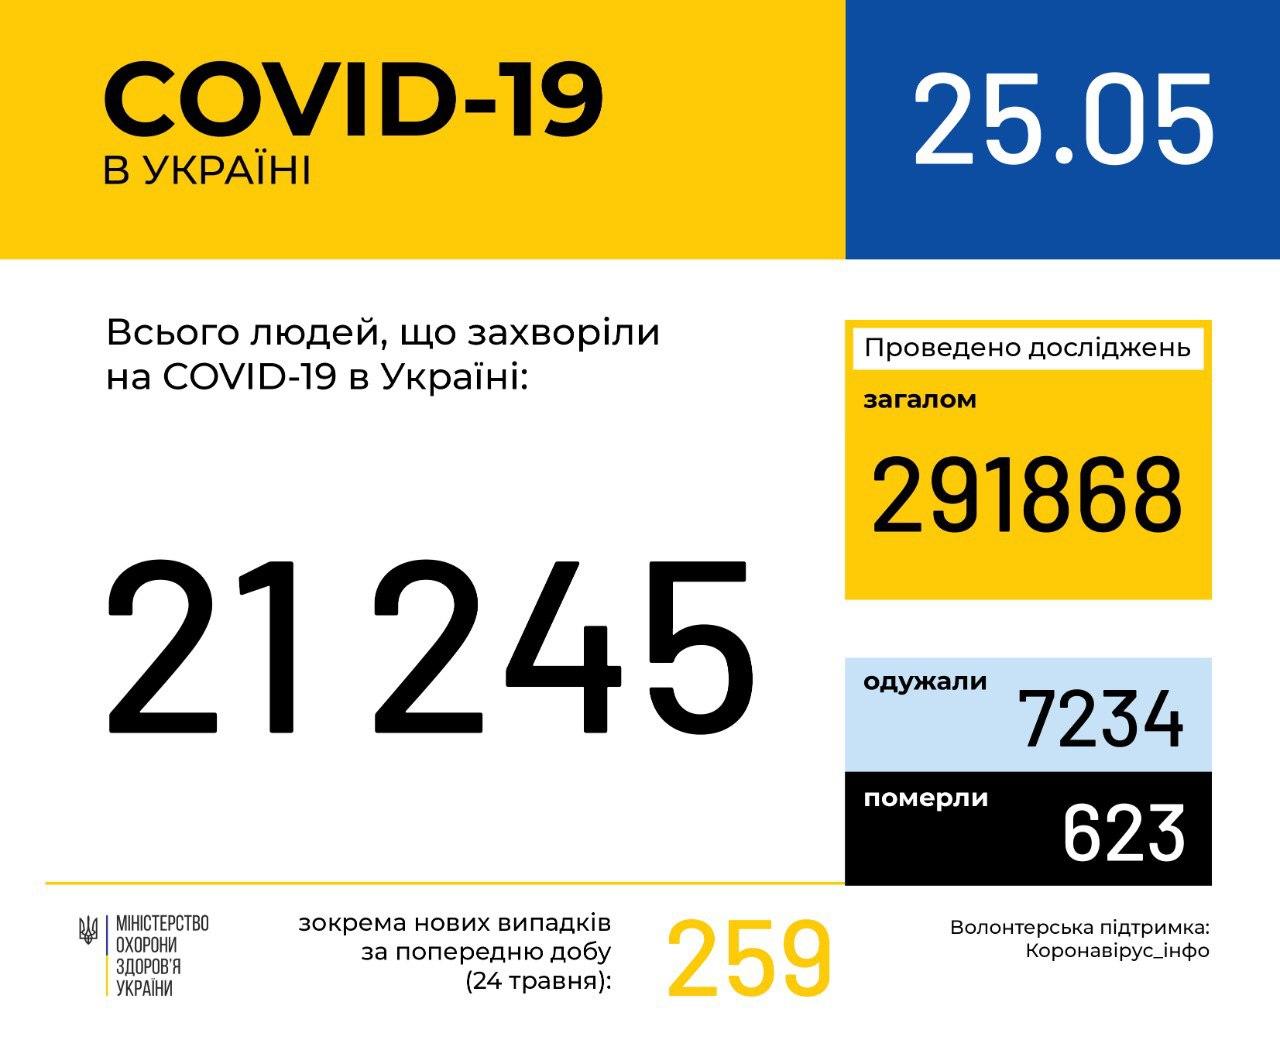 https://img.glavnoe.ua/Image2018/2020/05/25/photo_2020-05-25_09-12-37.jpg